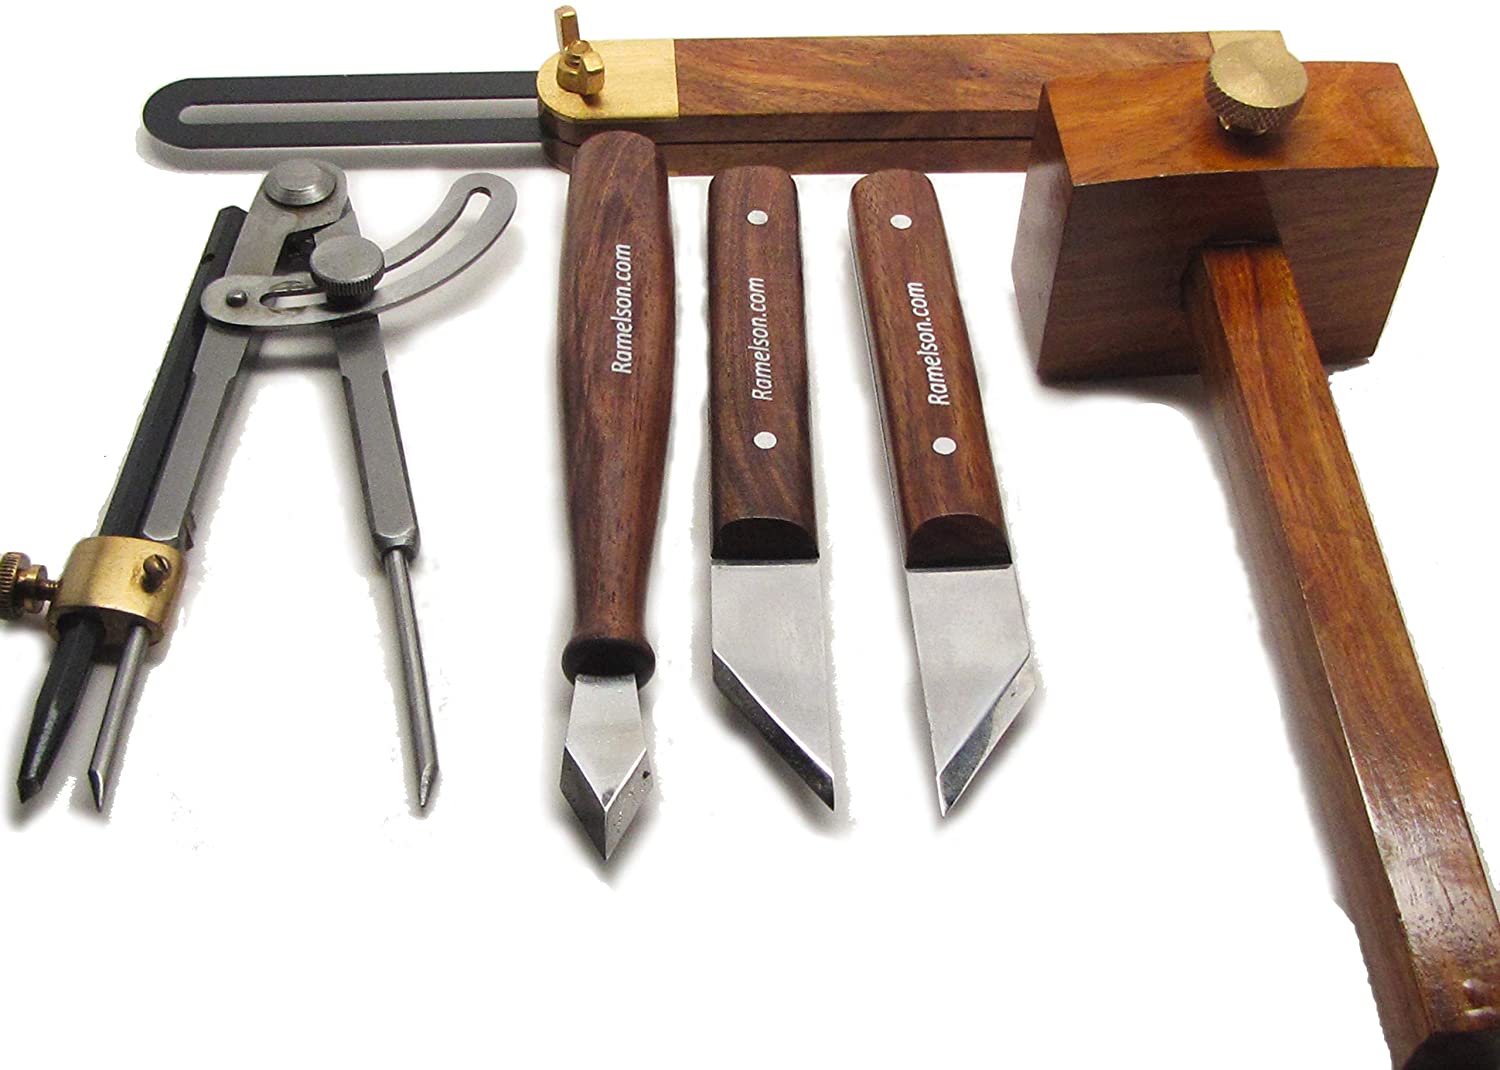 Wood Turning Tools: Six-Piece Professional Wood Marking Set